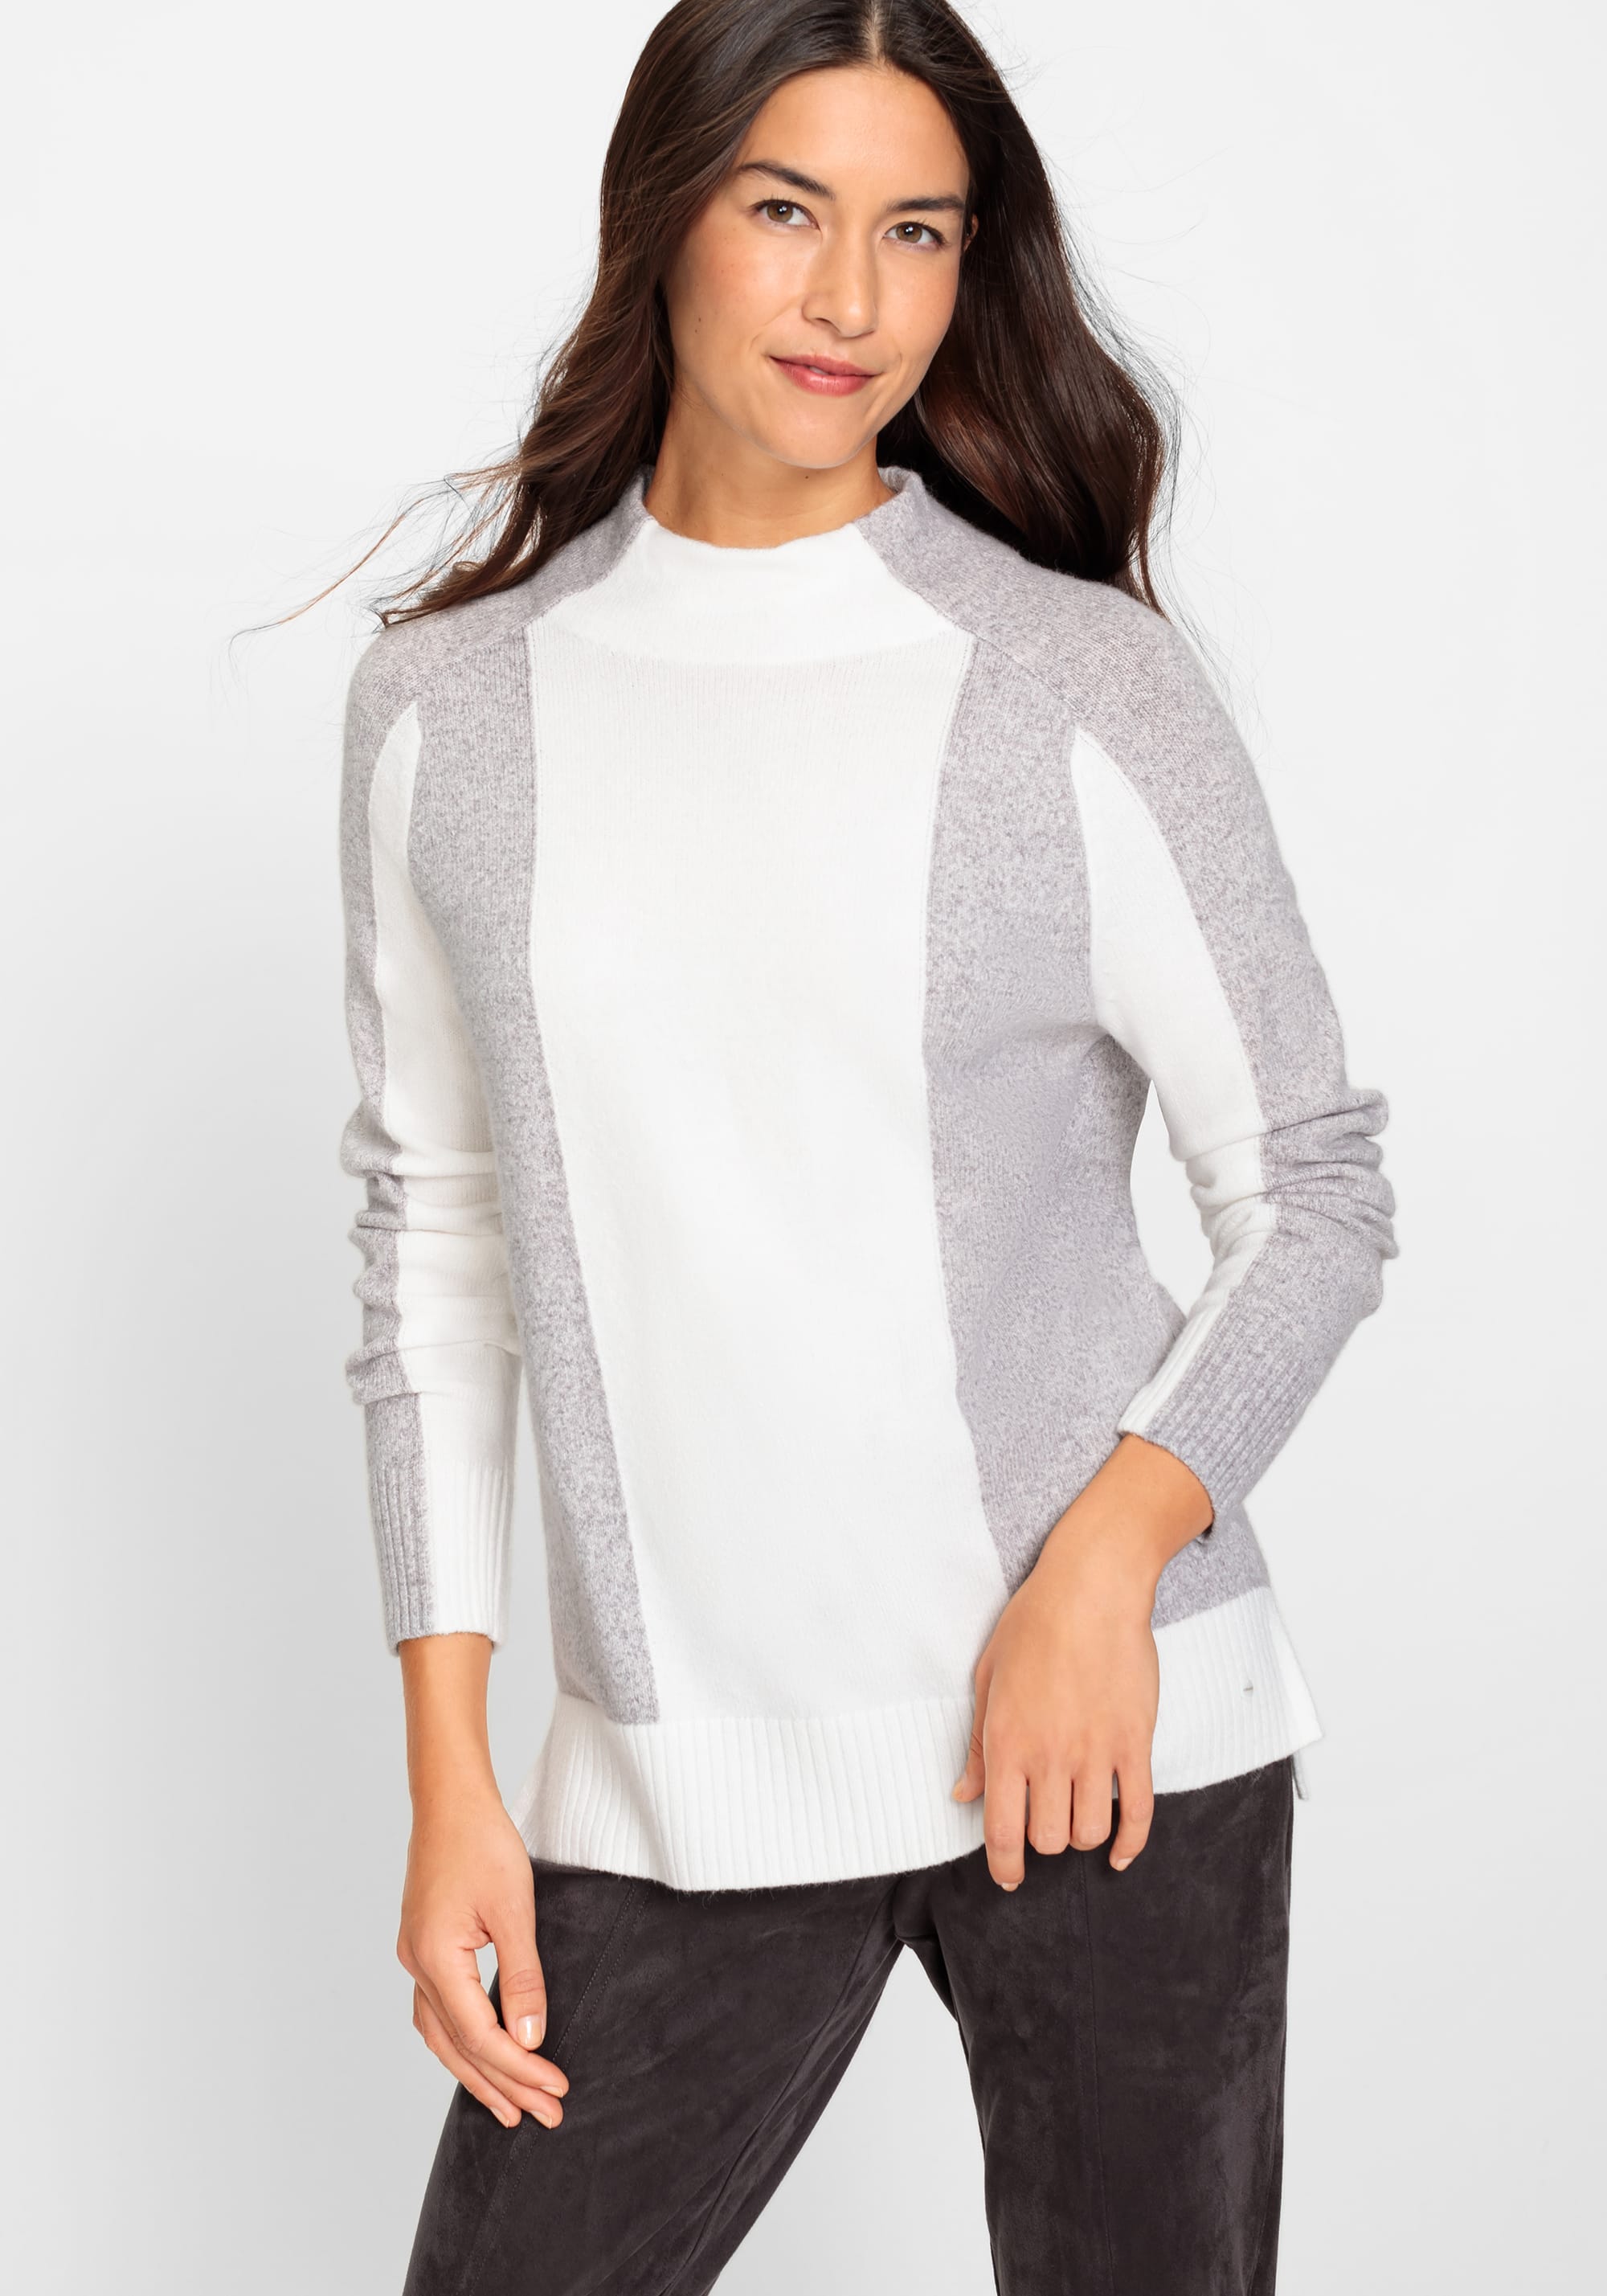 Sweaters Tagged Final Sale - Olsen Fashion Canada